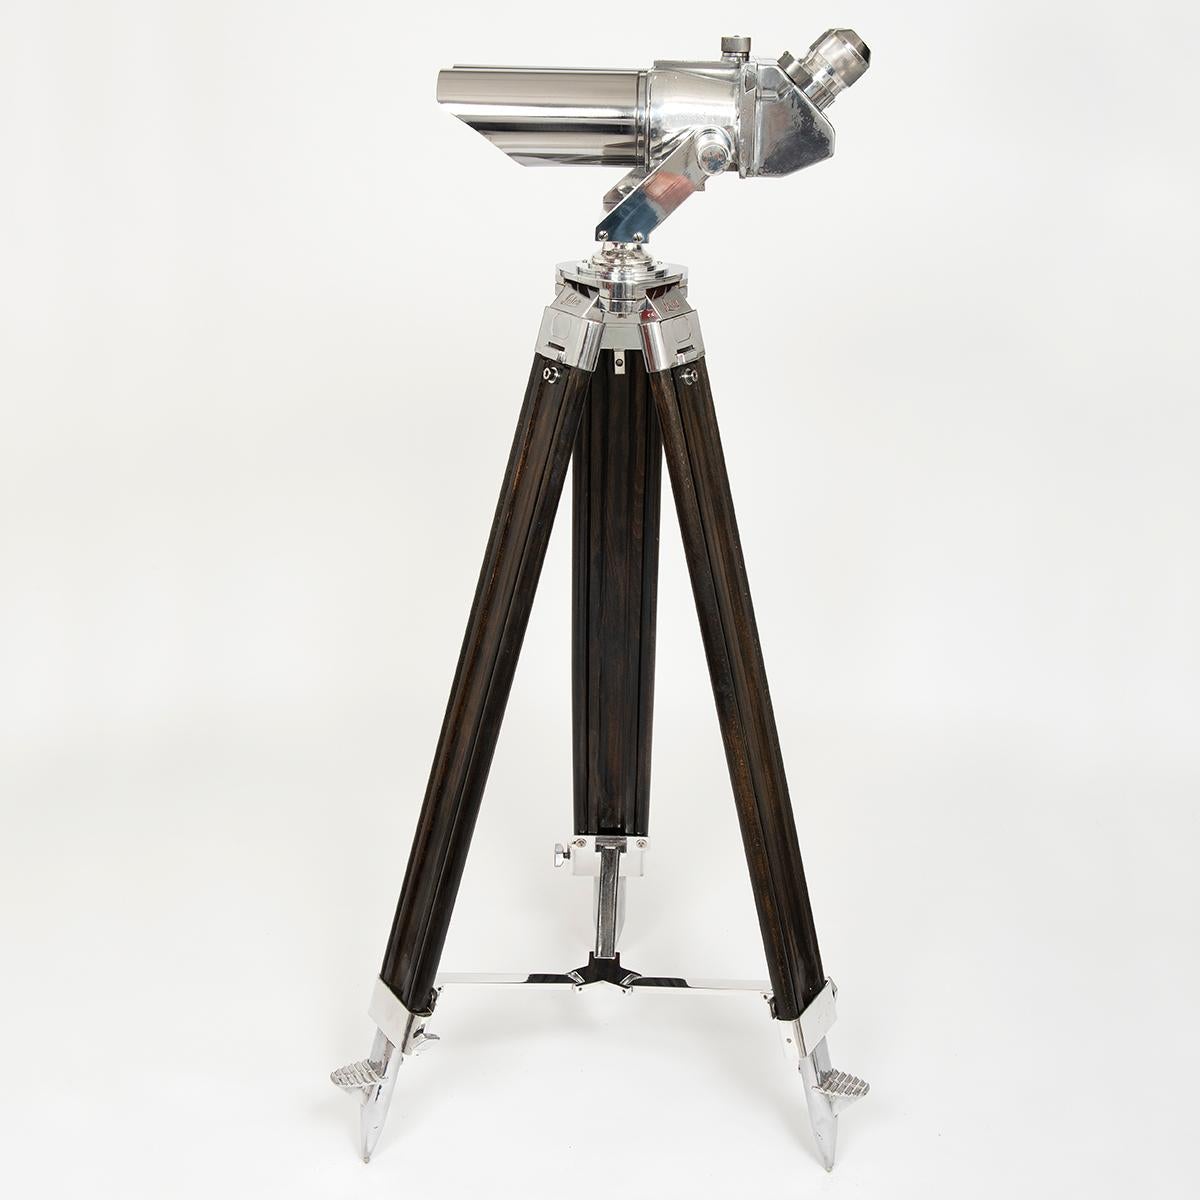 Desirable Jos Schneider & Co DKL Binoculars, Rare & Historical Object 2